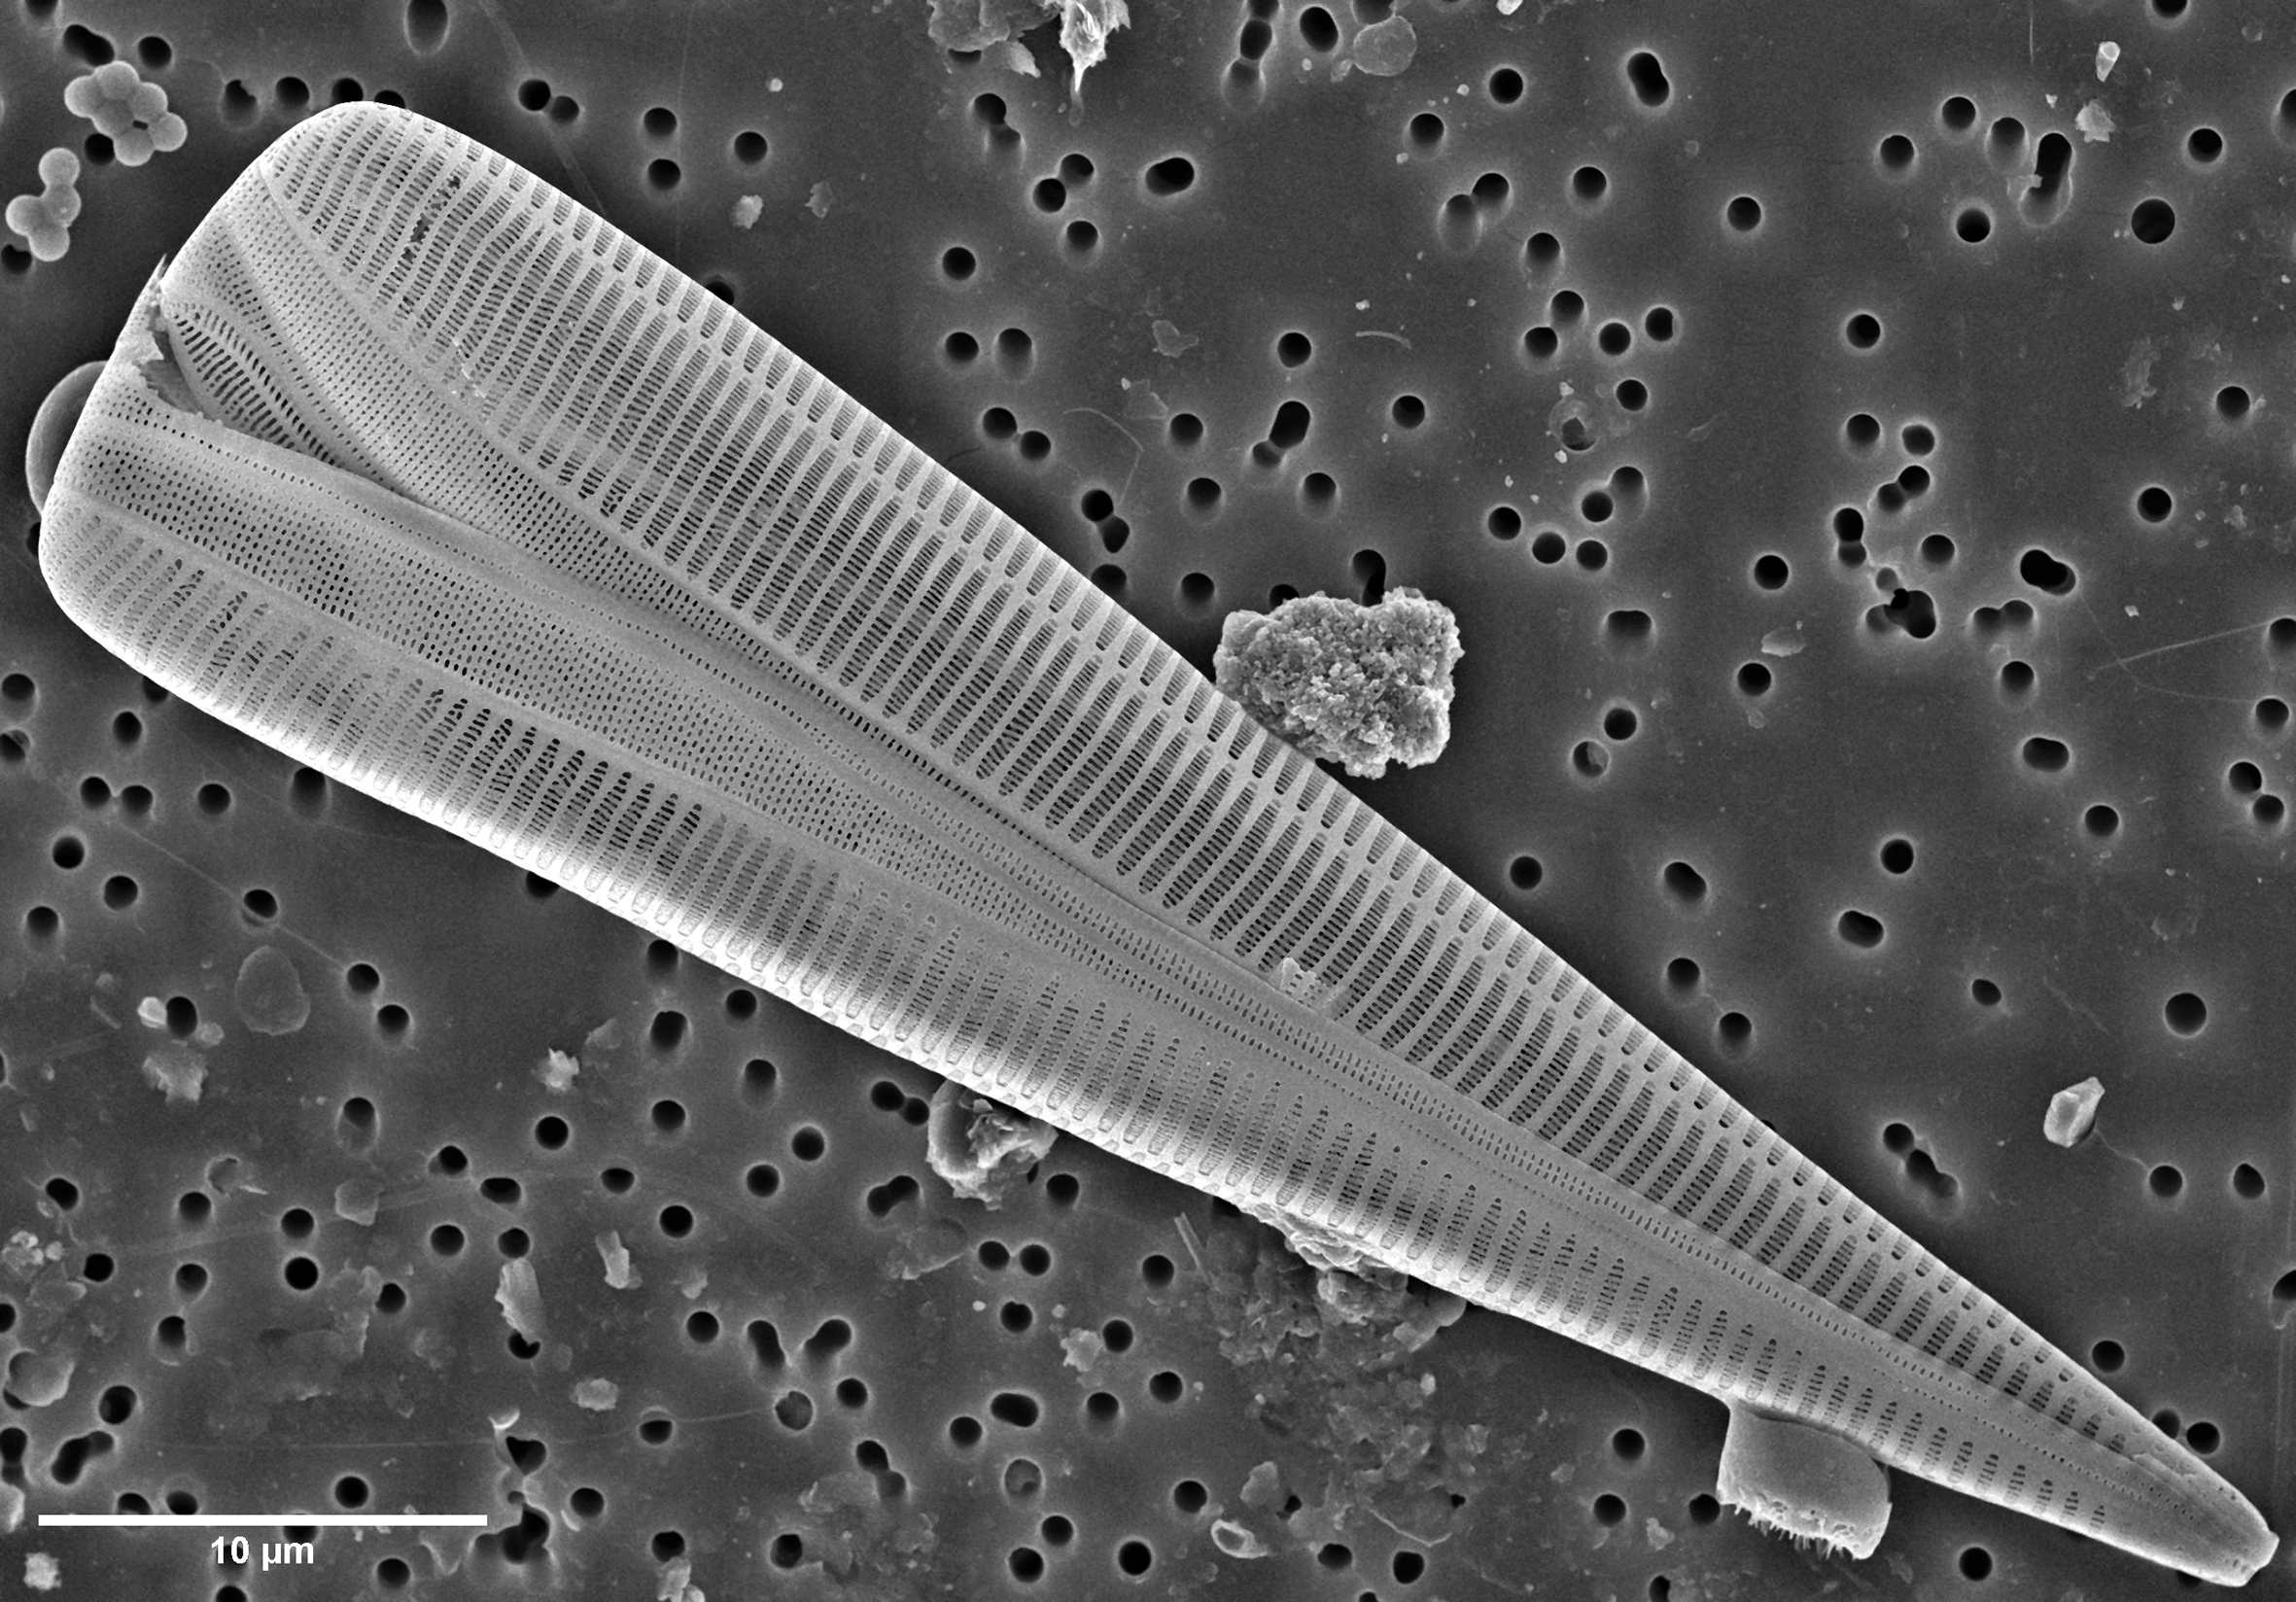 Pond water diatoms